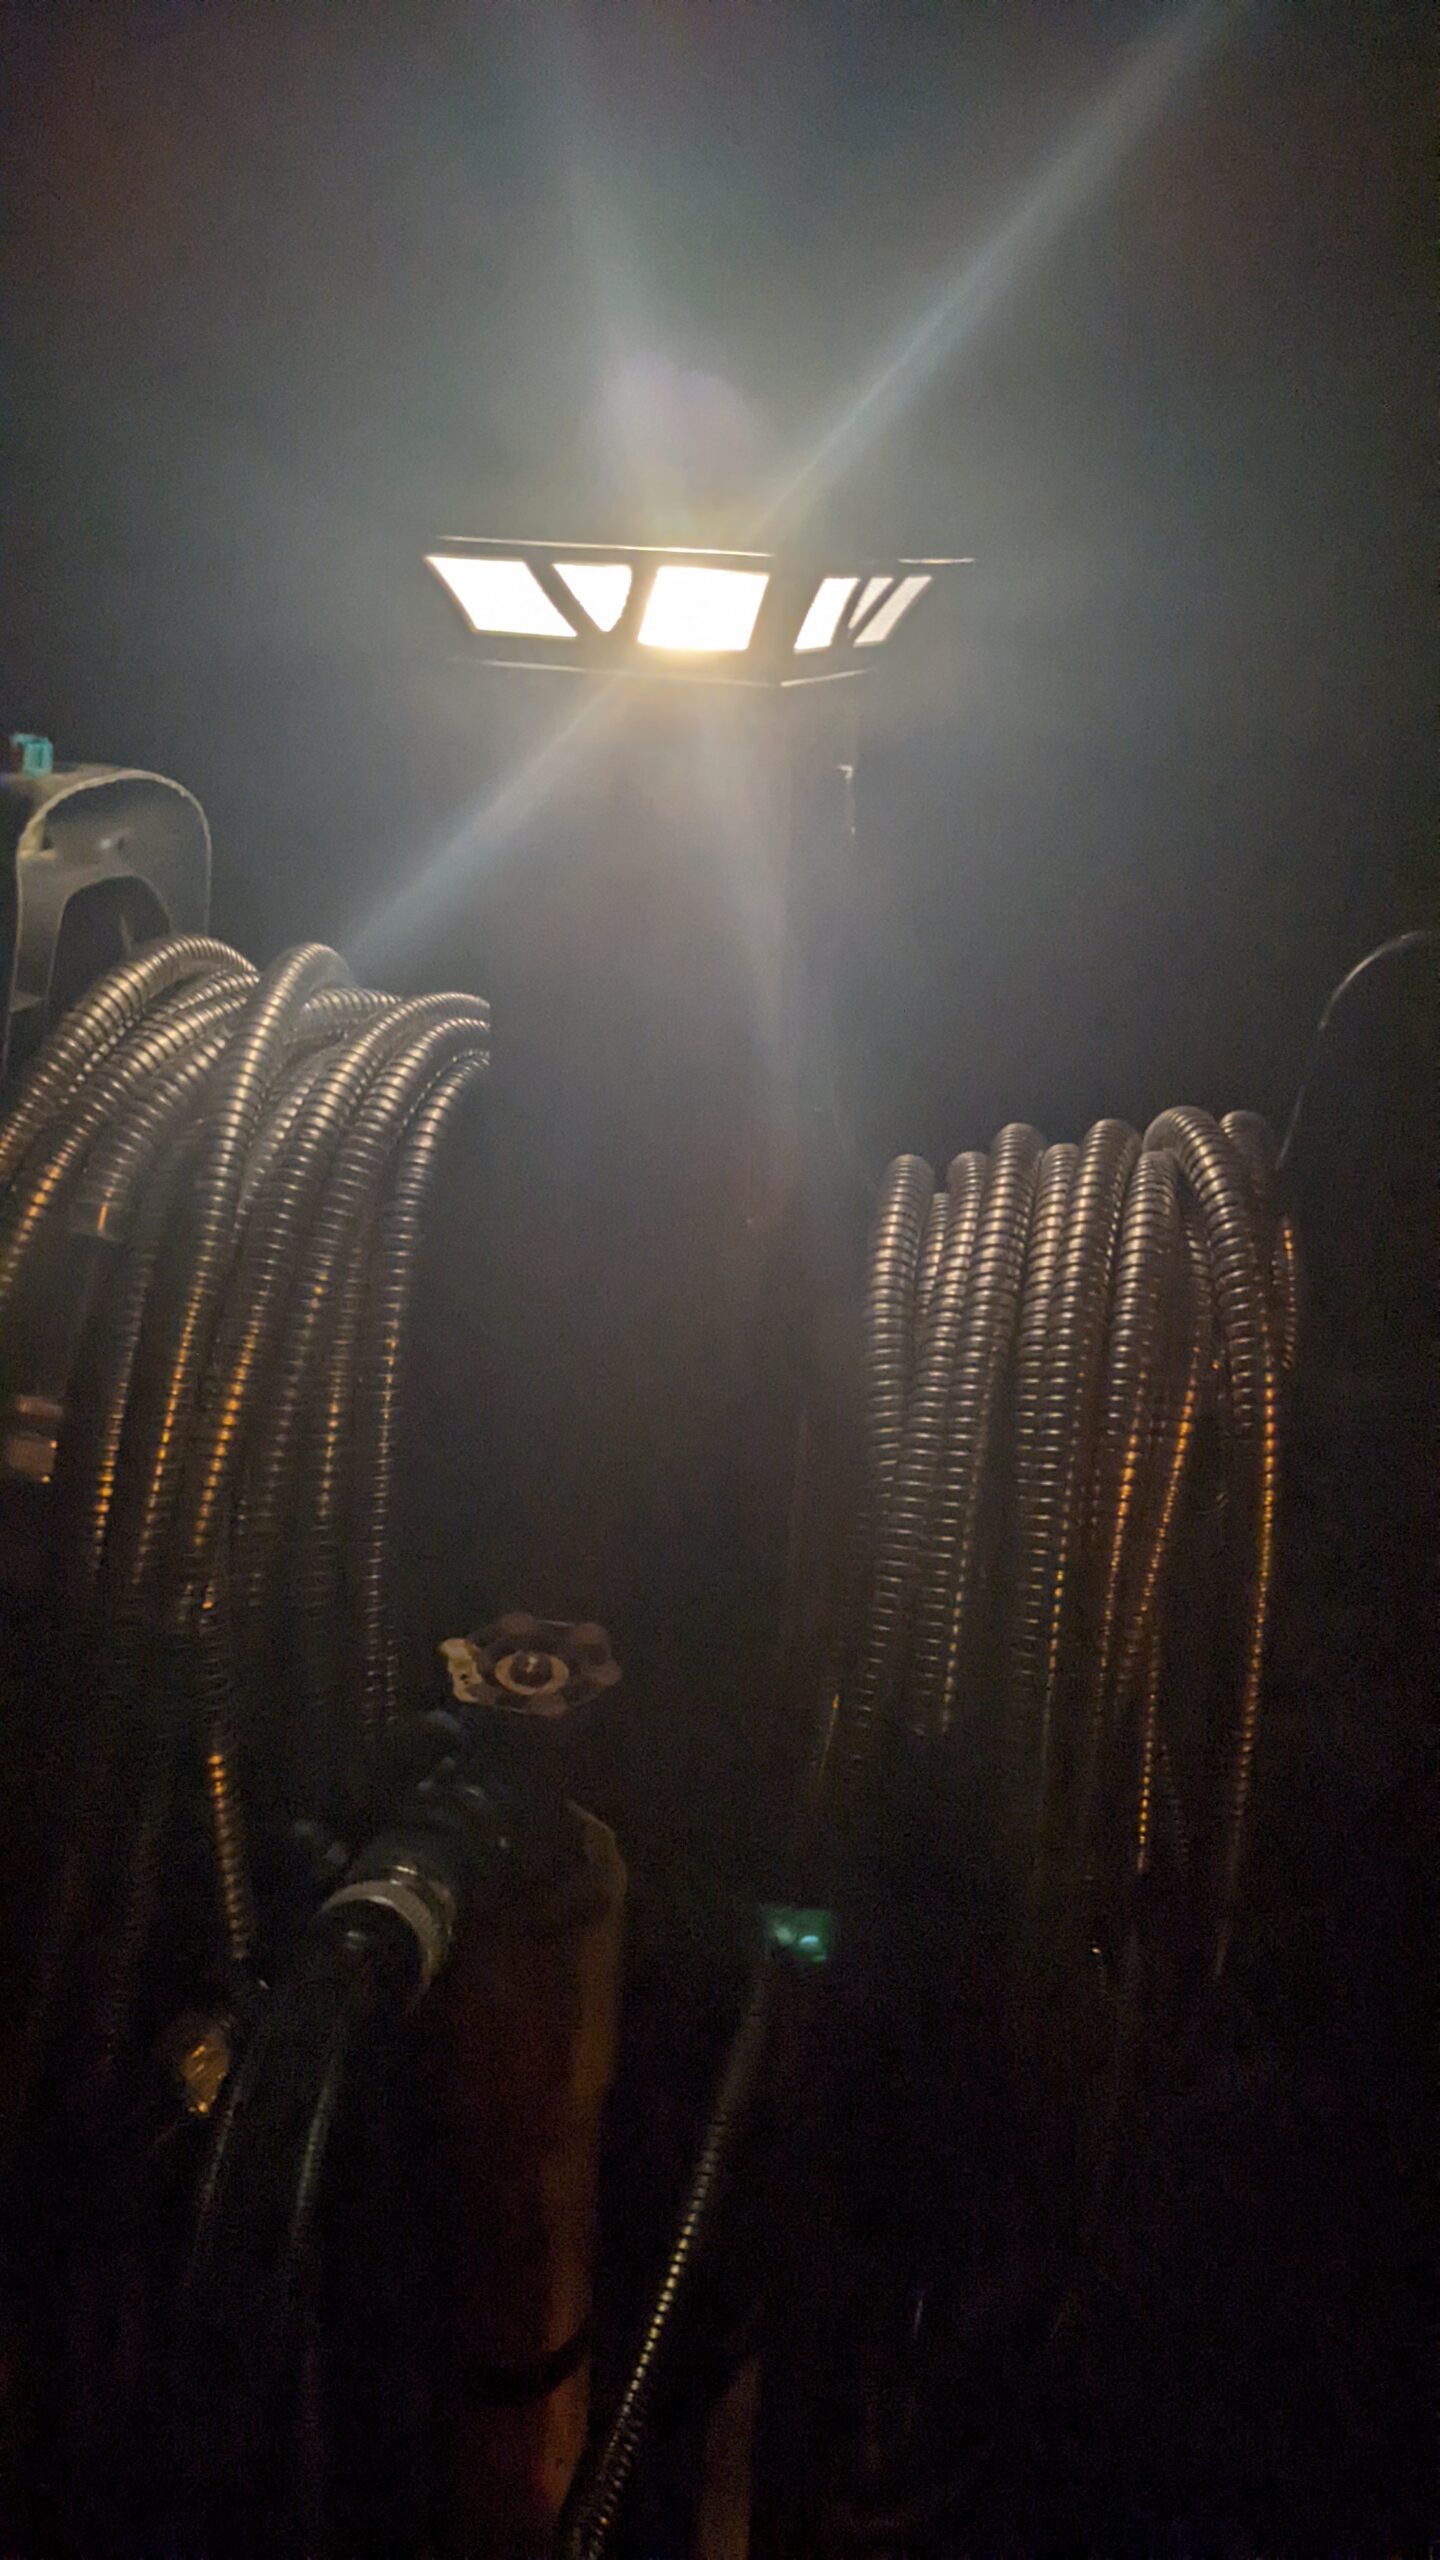 solar post cap illuminated at night